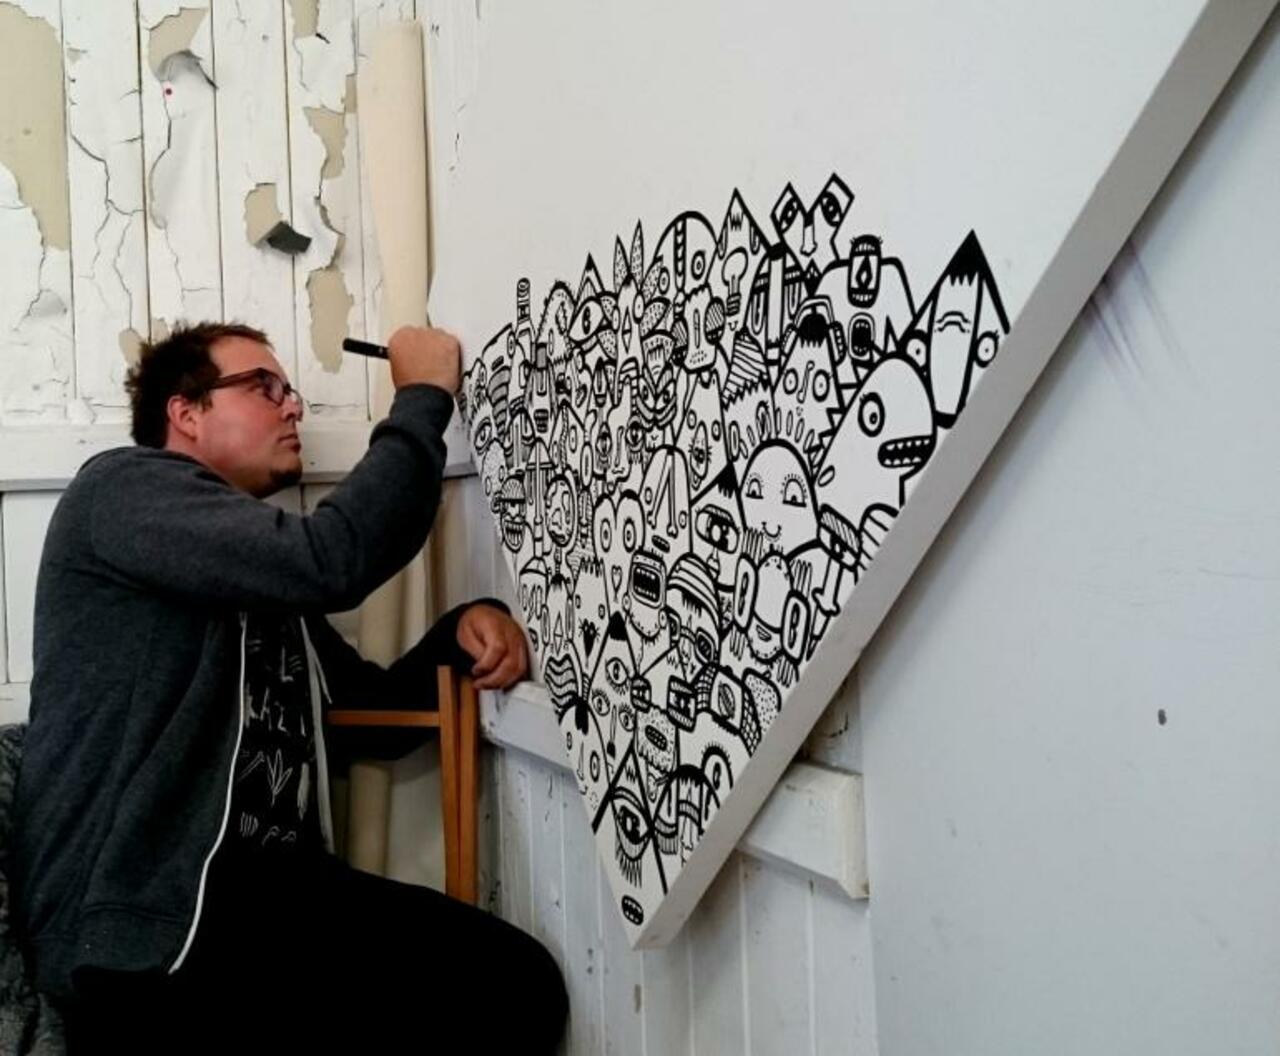 RT @artfinder: #CreativeWeekend We hope that Kev's work will make you #smile! » http://bit.ly/1IQP5g3 #graffiti #urban #streetart http://t.co/Nr485SWWFD